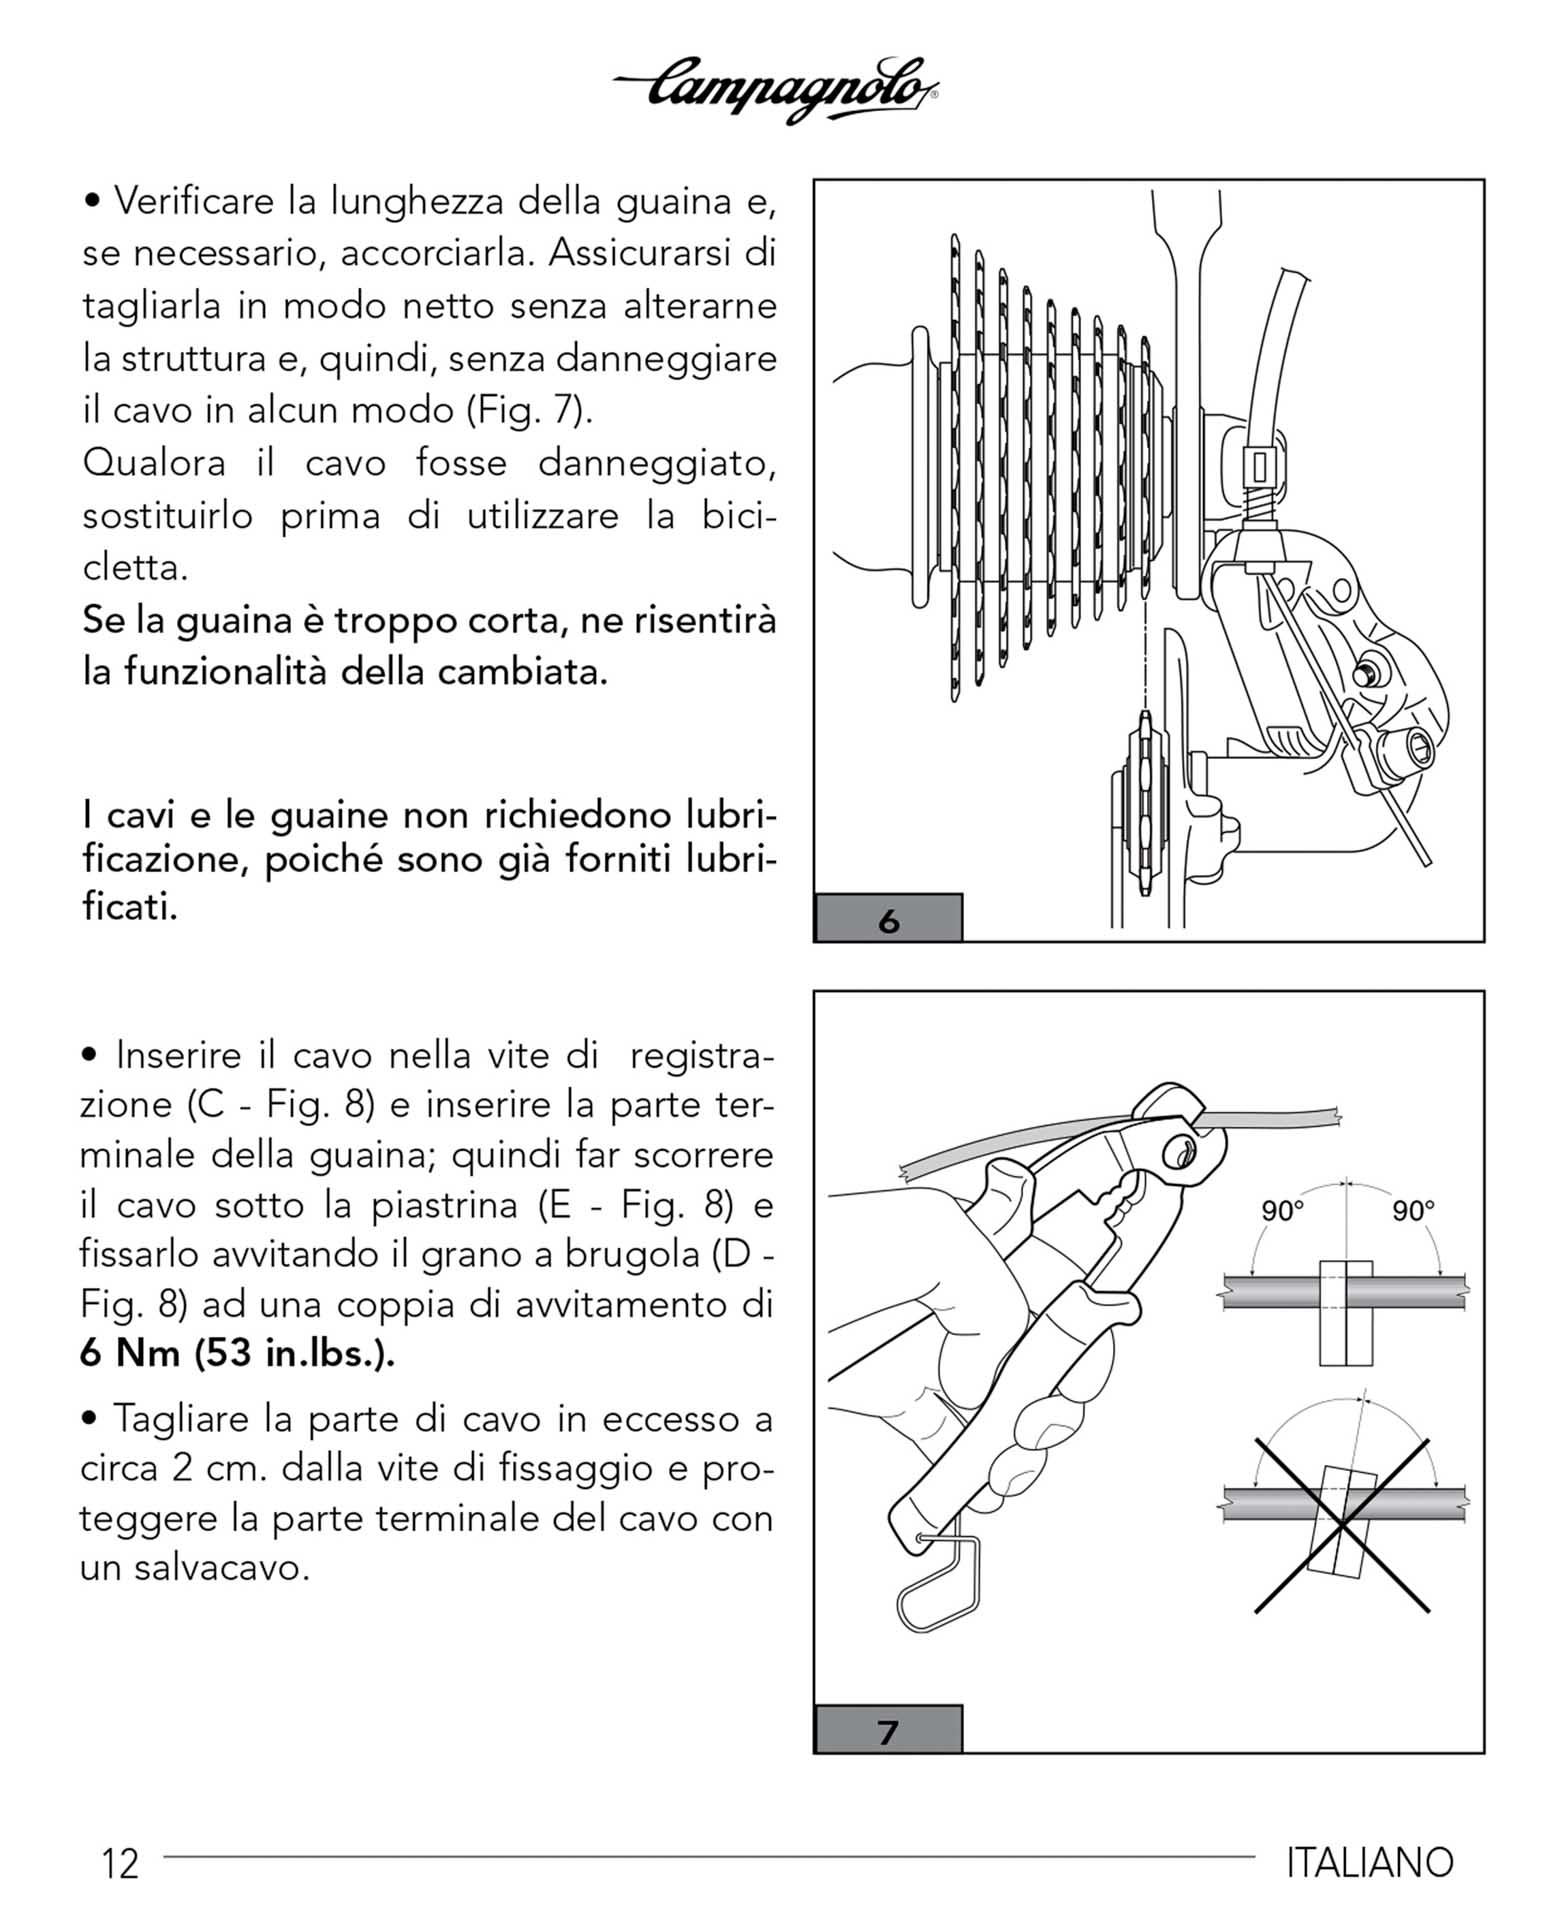 Campagnolo instructions - 7225475 Rear Der Usr Man ('01/2015') page 012 main image